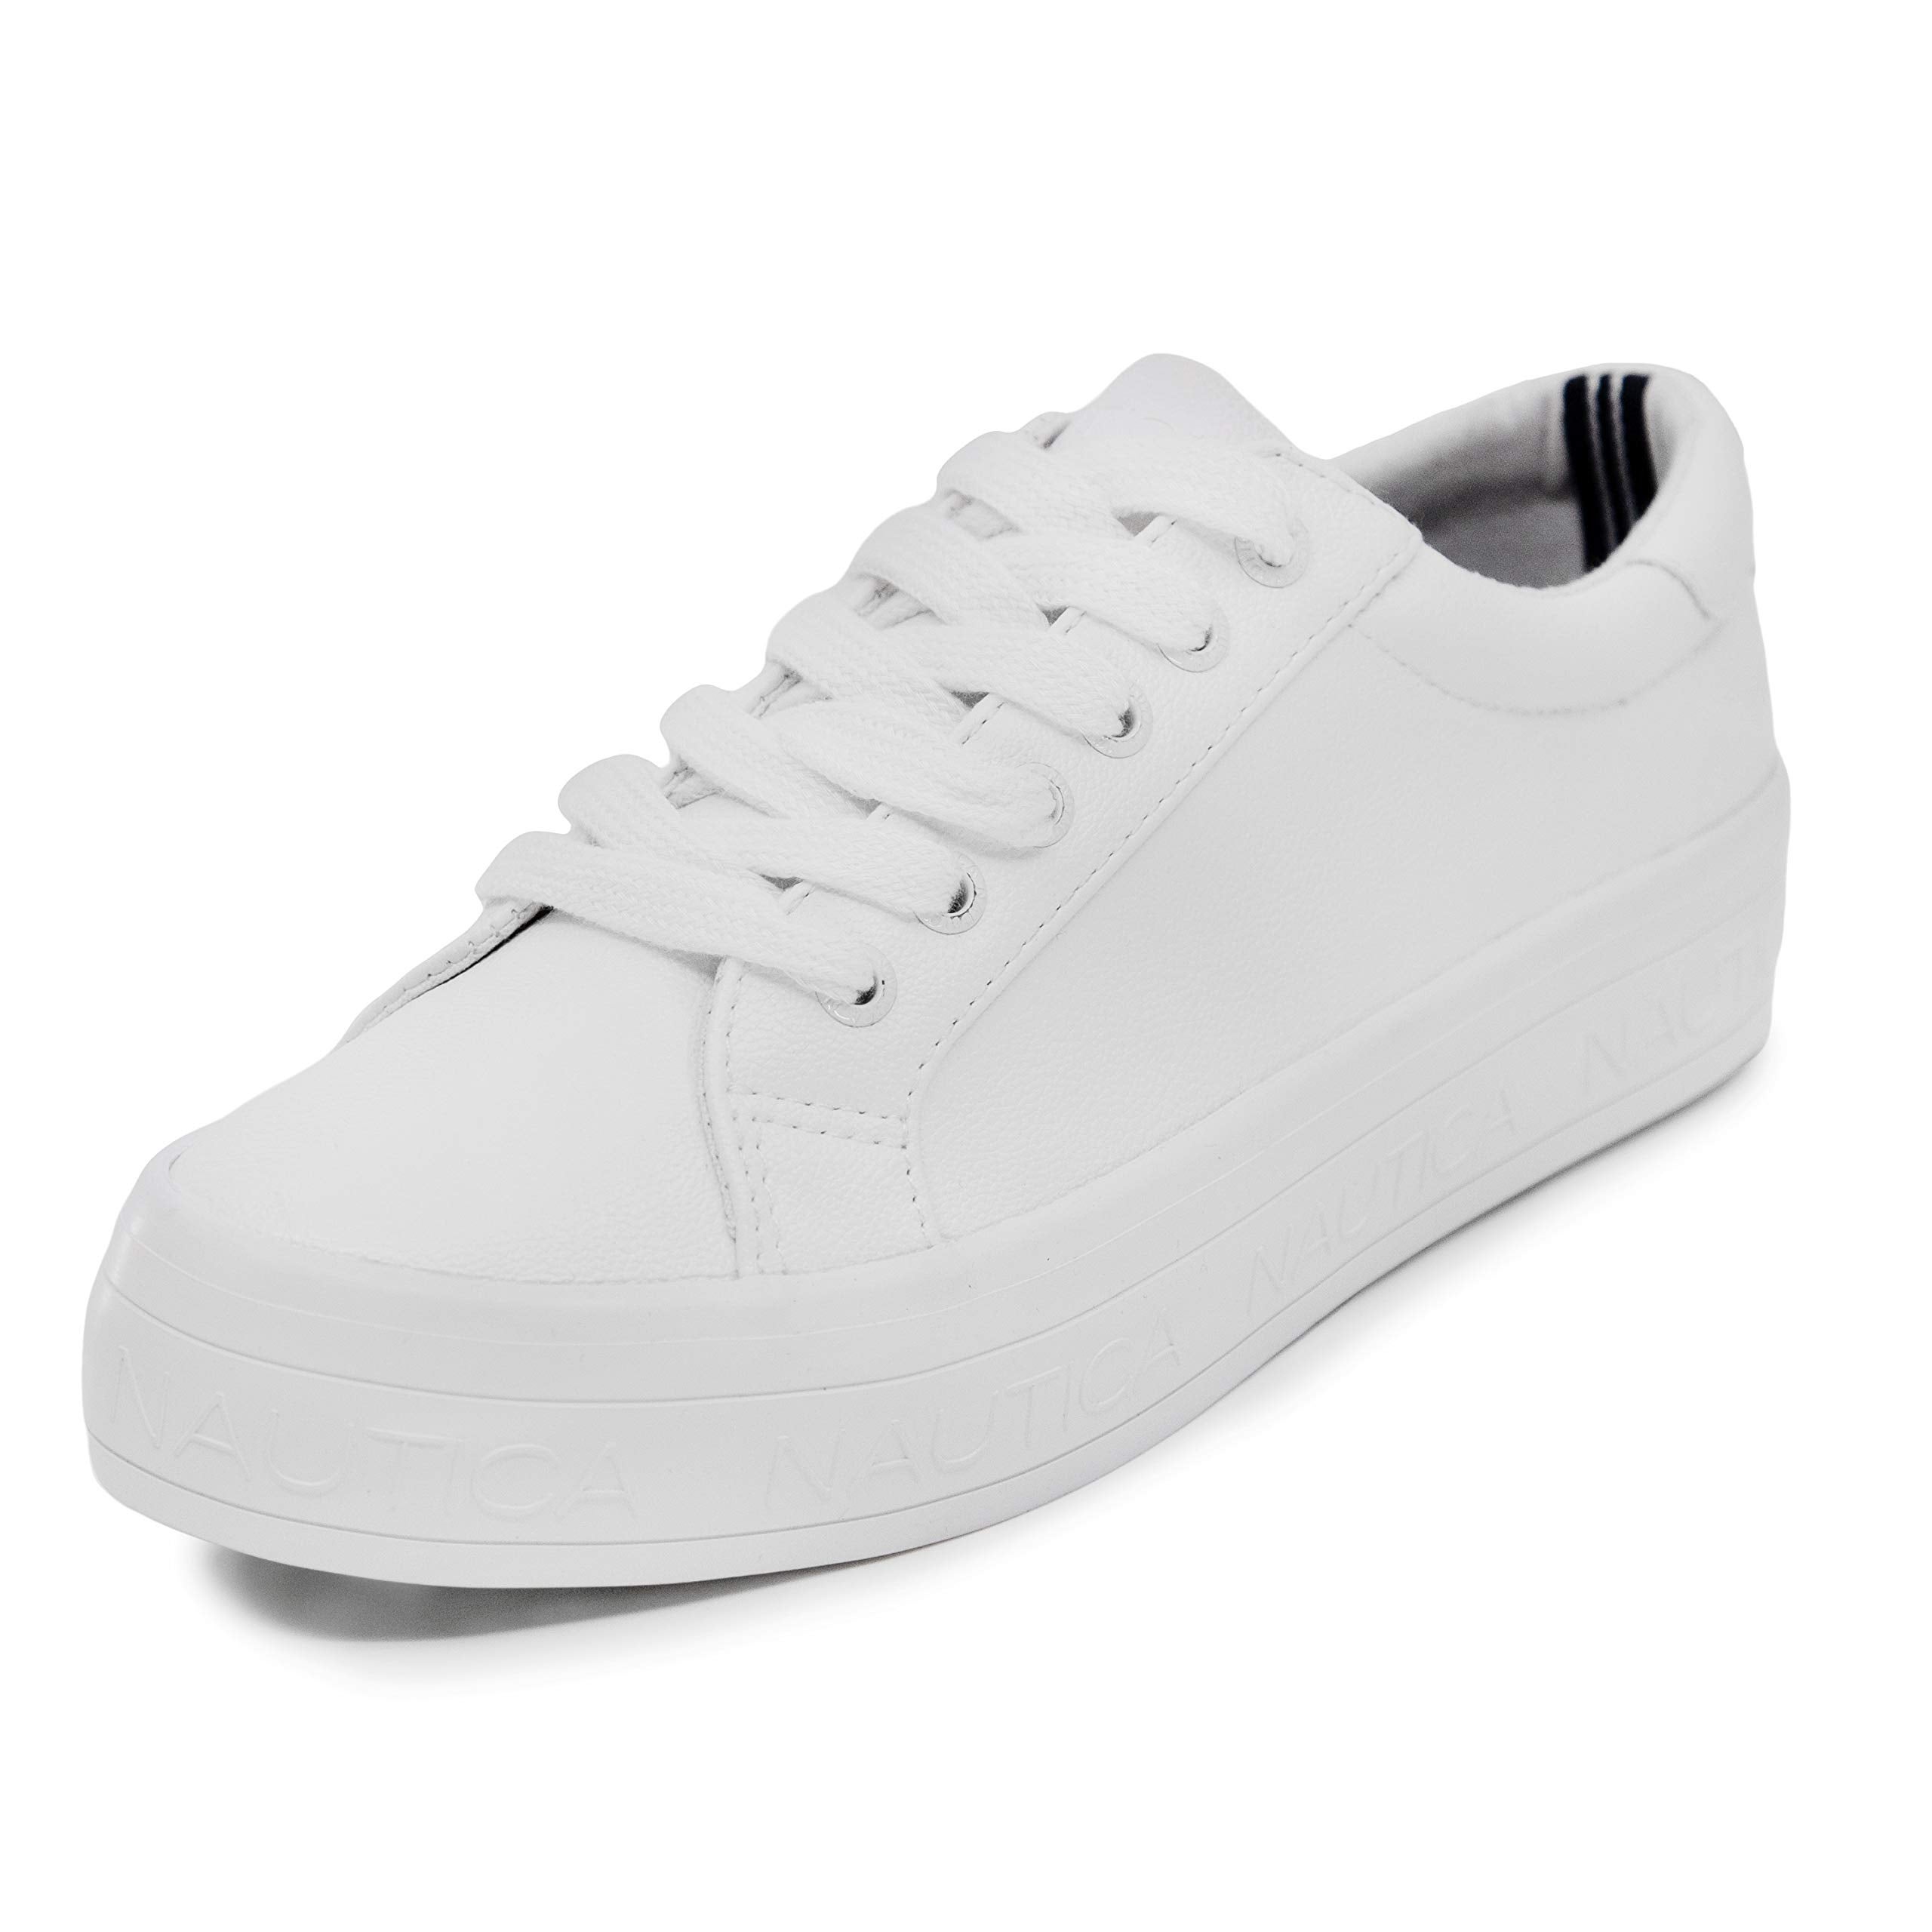 Hrx White Shoes Discount Factory, Save 61% | jlcatj.gob.mx